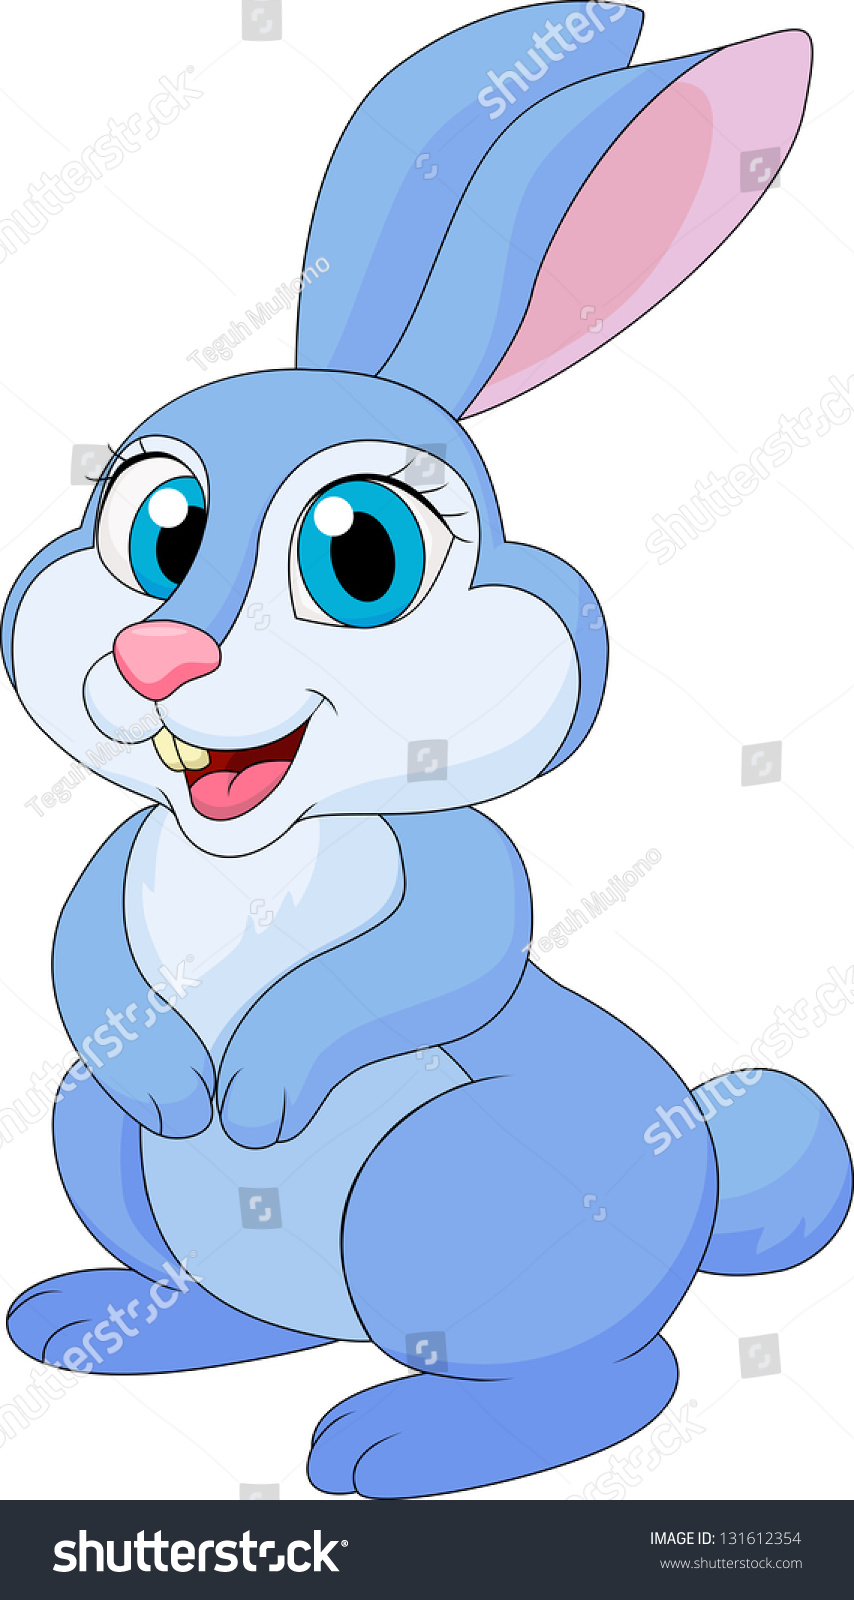 Cute Rabbit Cartoon Stock Photo 131612354 : Shutterstock